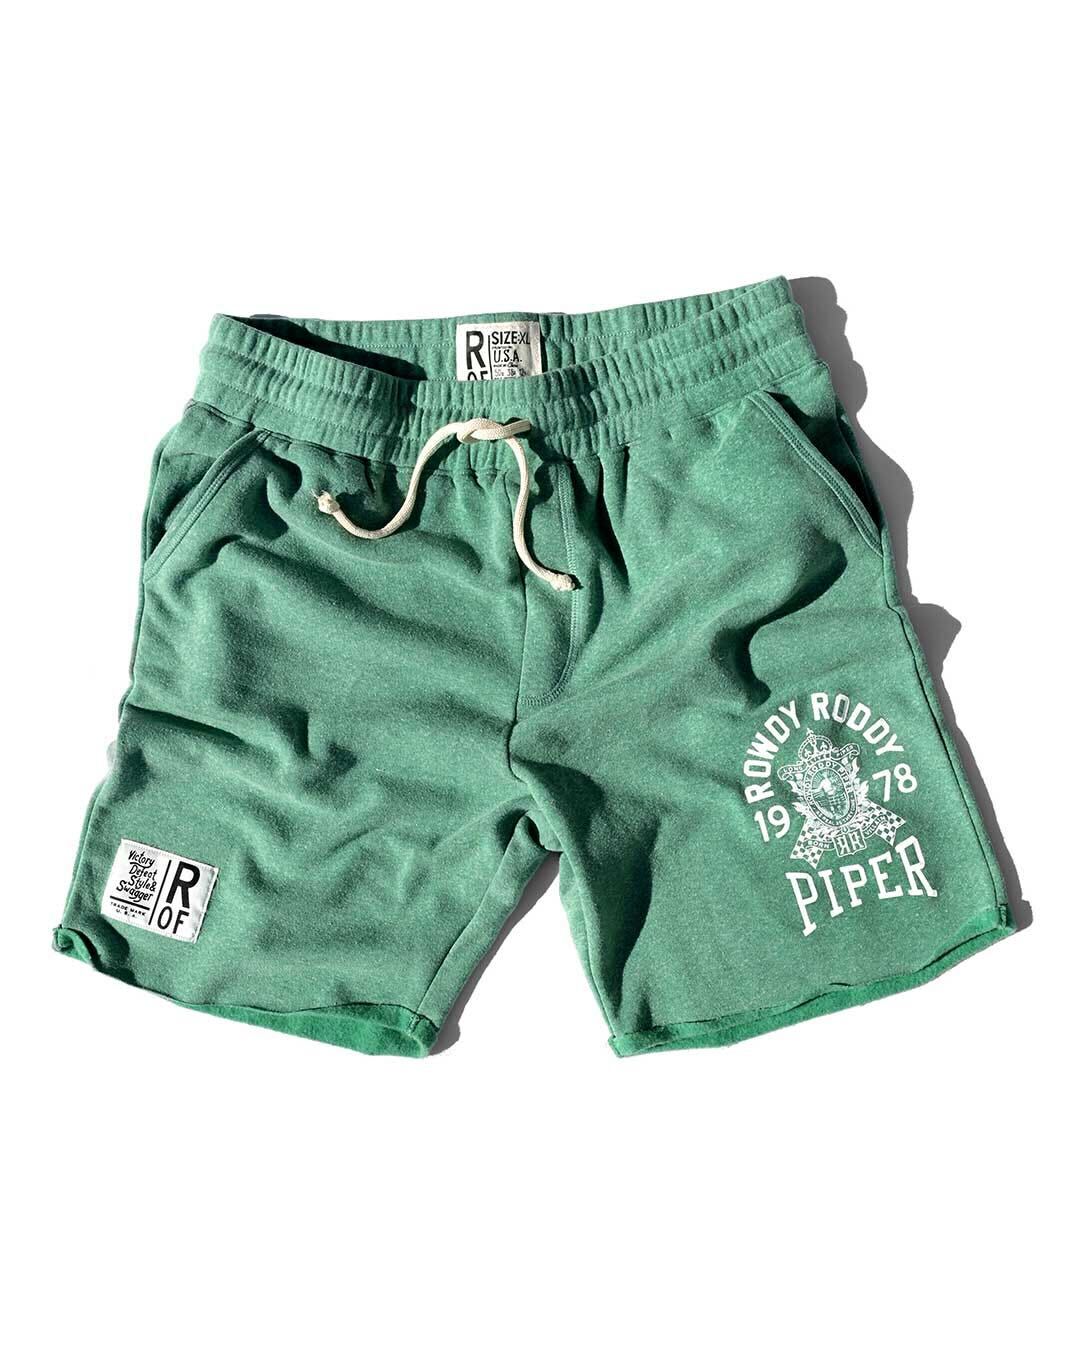 Rowdy Roddy Piper Born Villain Green Shorts - Roots of Fight Canada